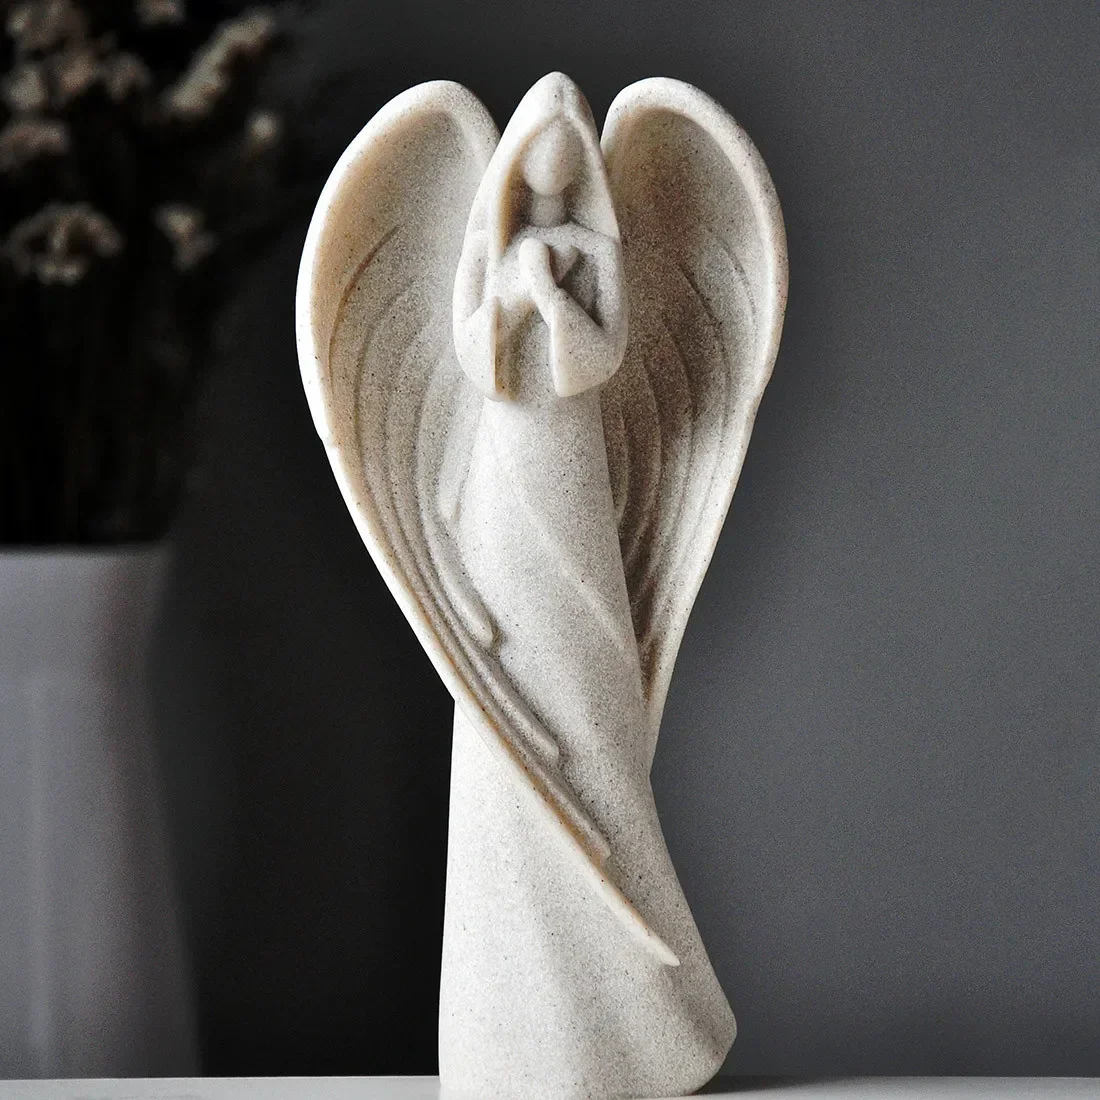 

Vilead Retro Angel Figurines Resin Sculpture Stattue Living Room Home Bedroom Decoration Accessories Garden Office Desk Decor